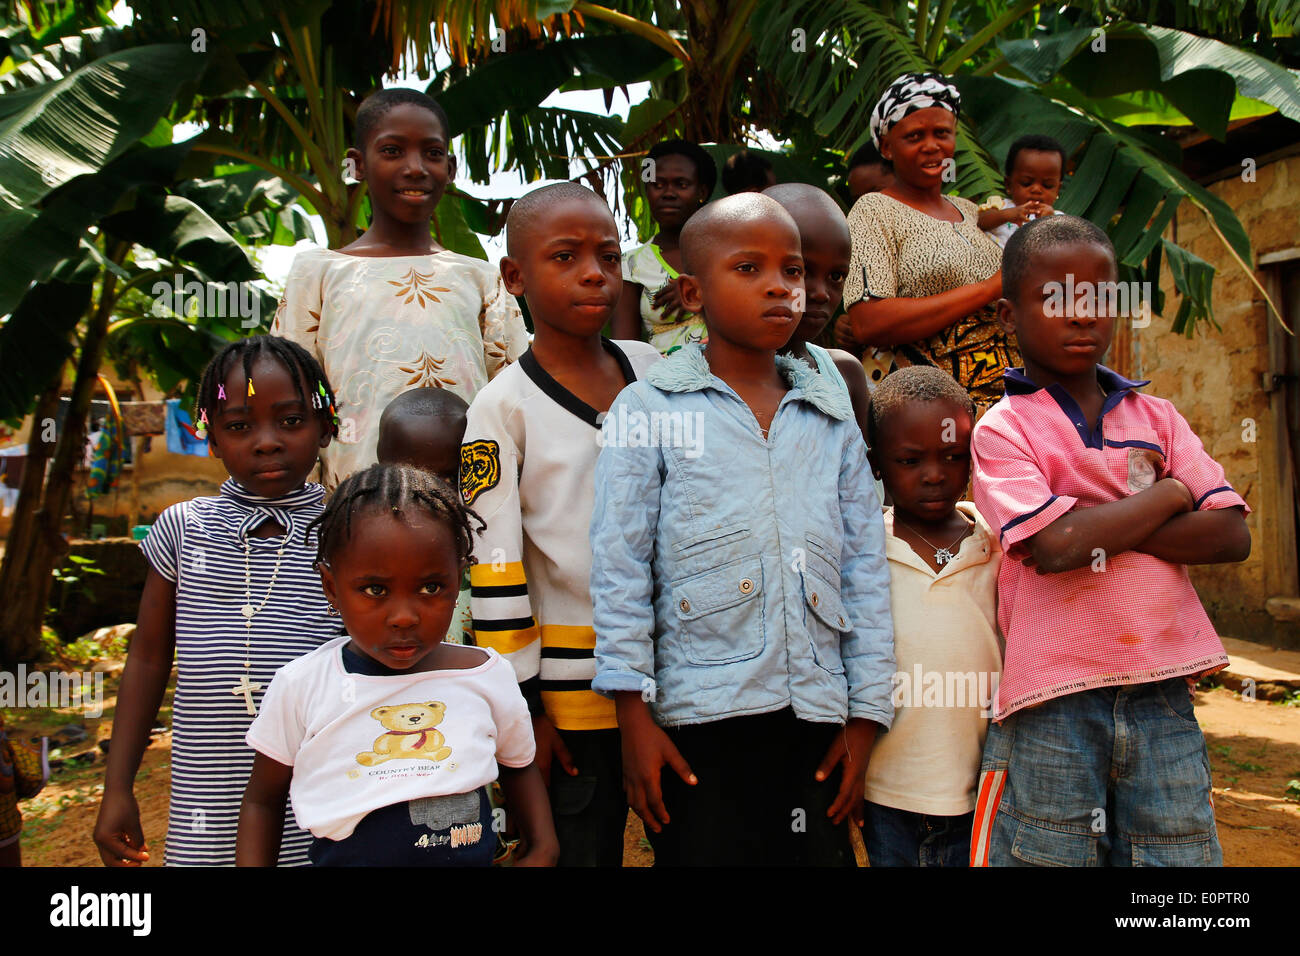 Children in a local village in Nigeria Stock Photo